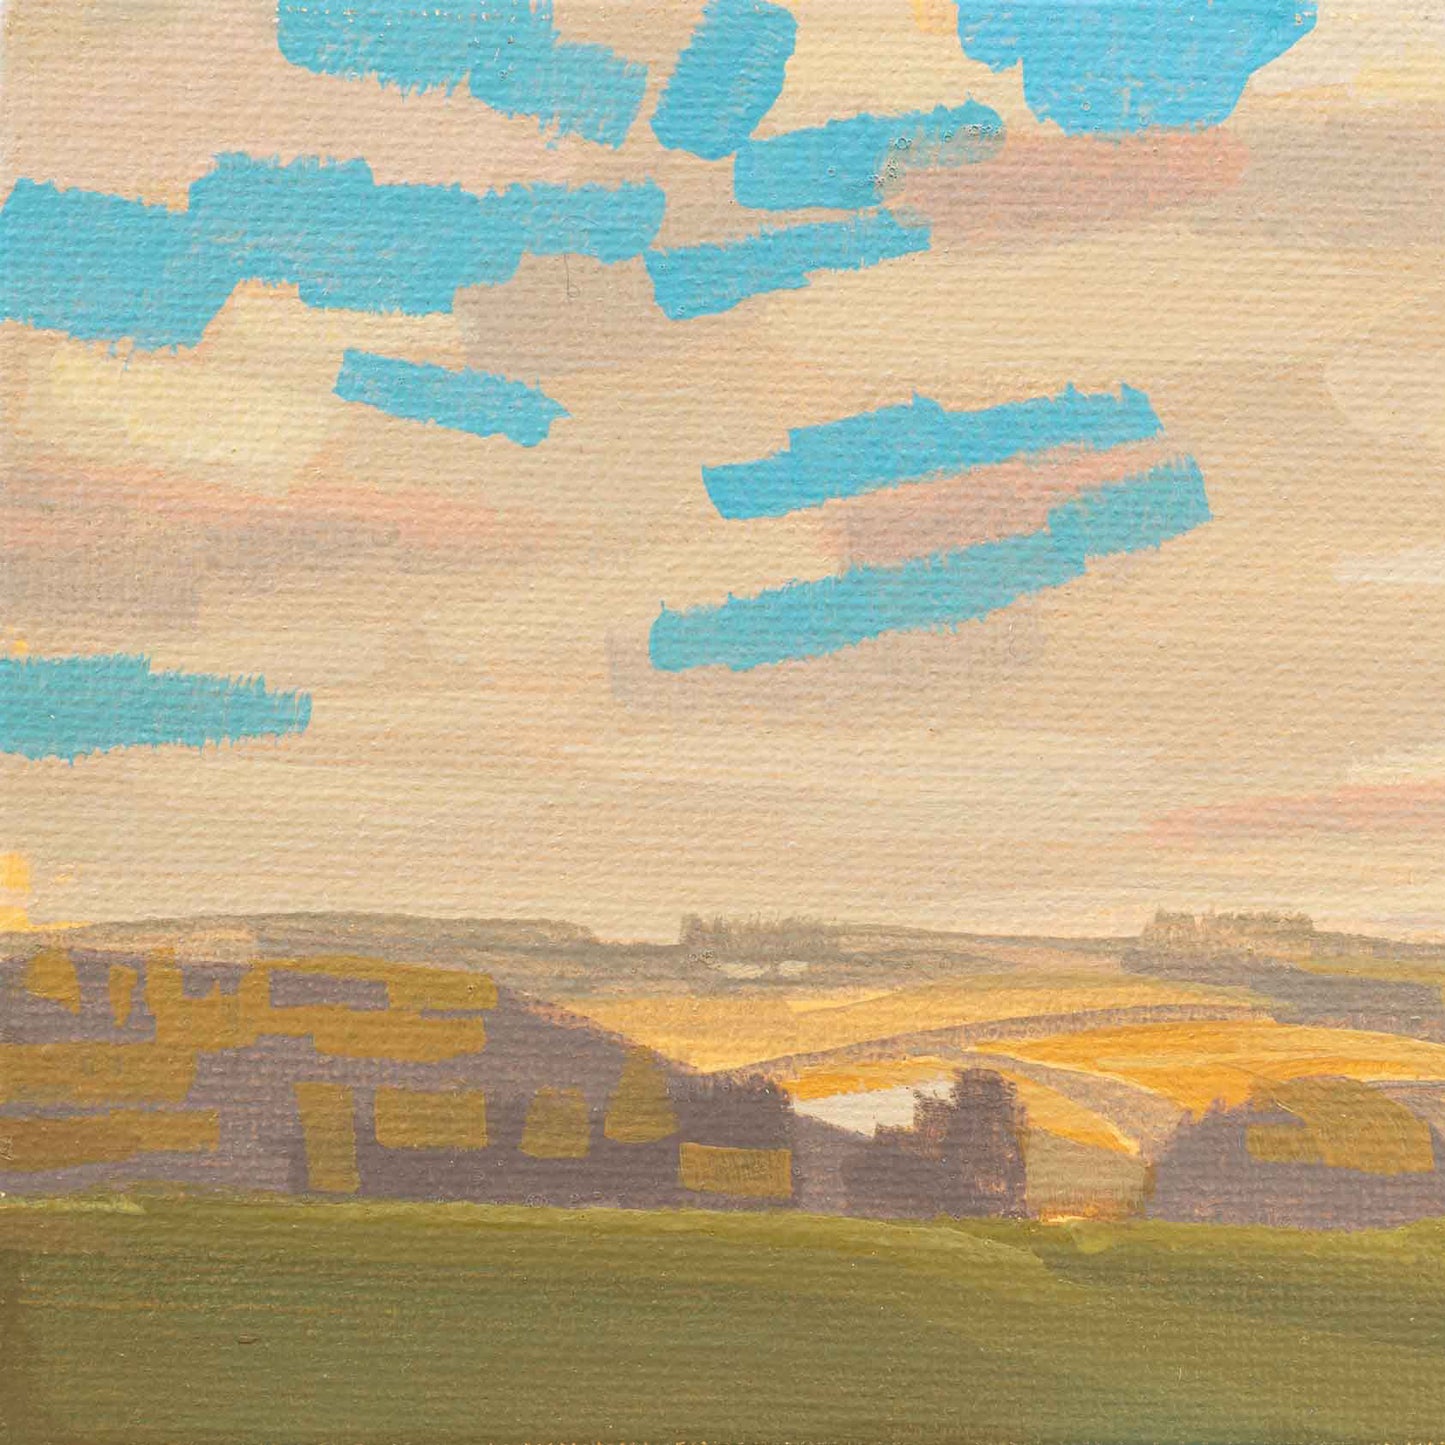 Original painting - "Evening Sun" - hand painted - acrylic painting - 10x15 cm - landscape picture - unique piece - with frame